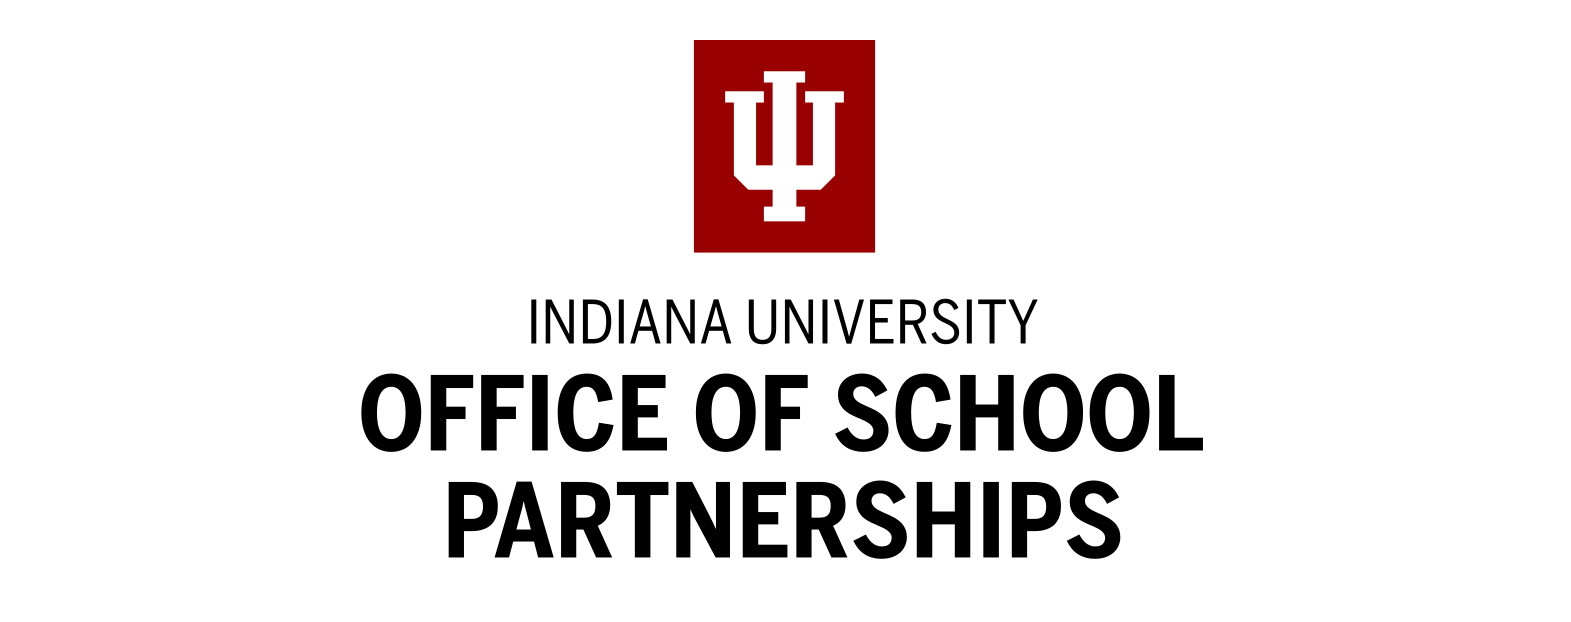 IU Office of School Partnerships logo with IU trident